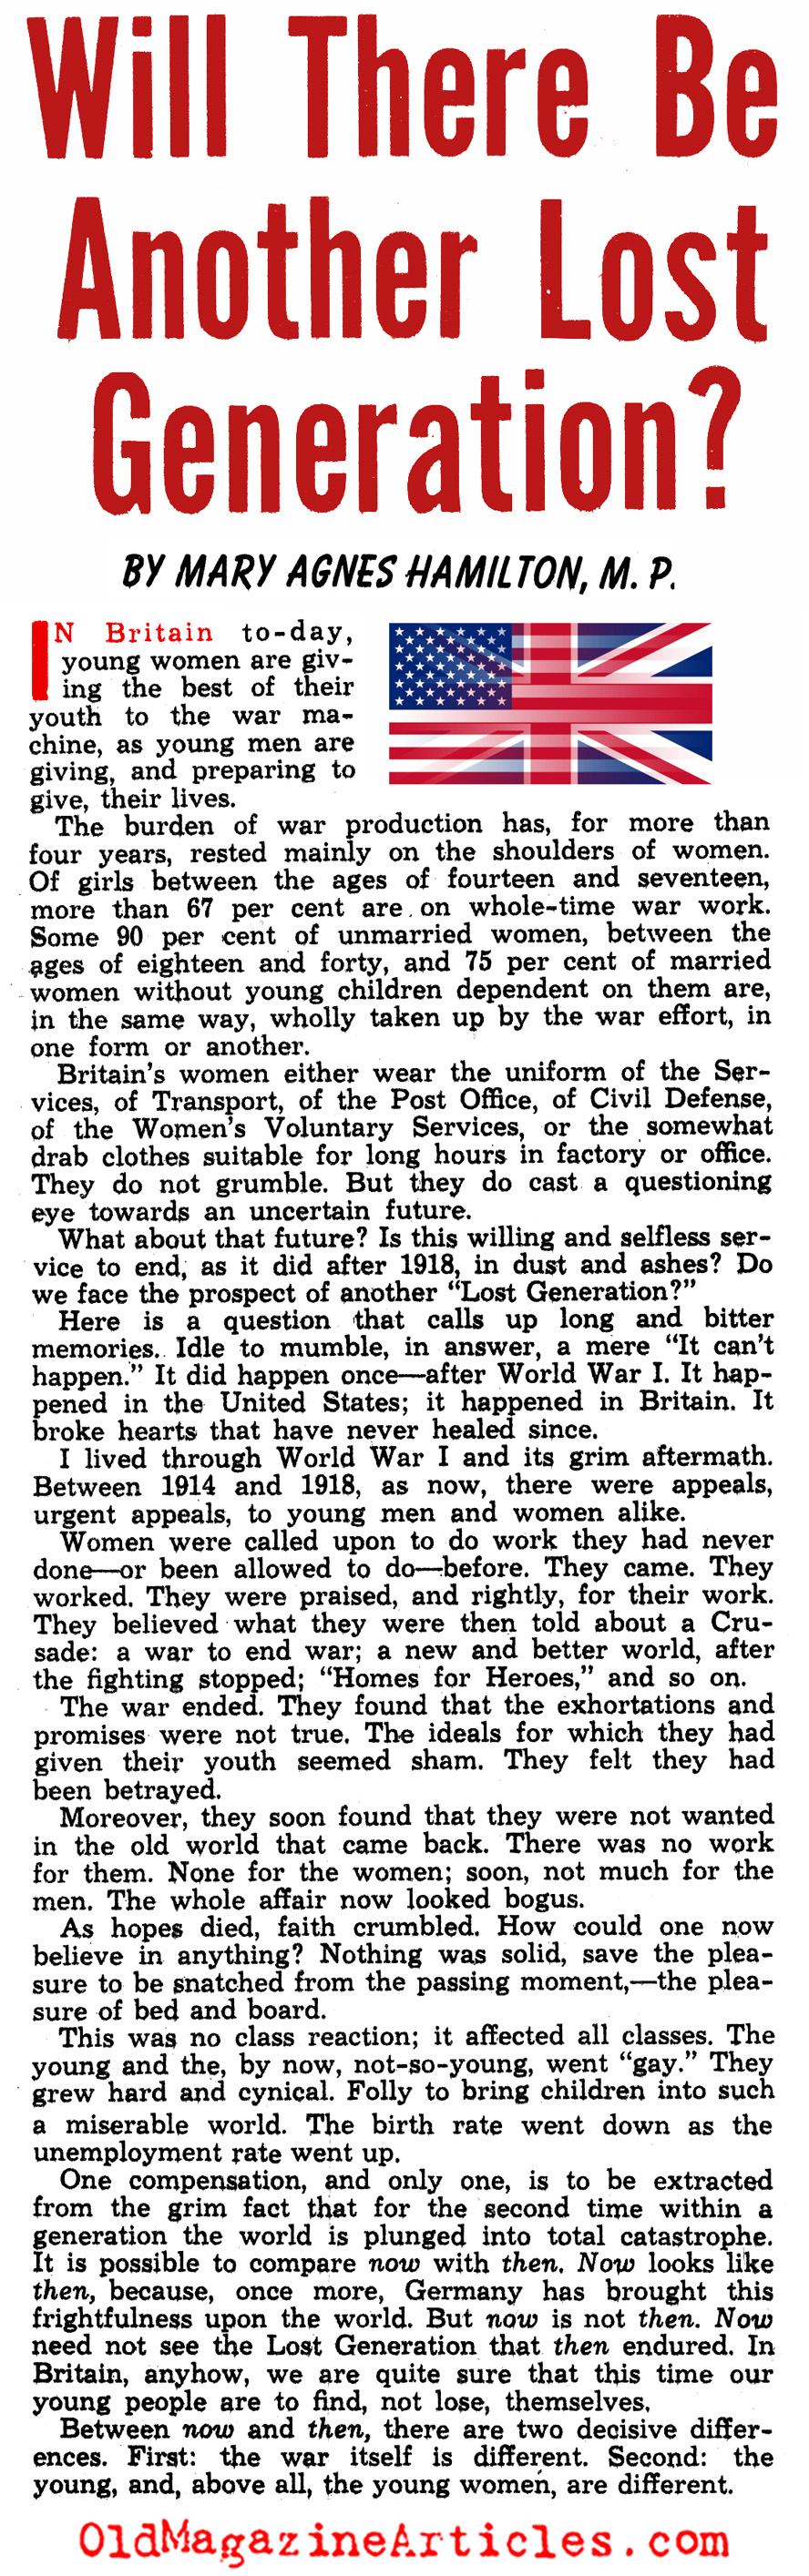 Will Disenchantment Follow This War, Too? (World Magazine, 1944)